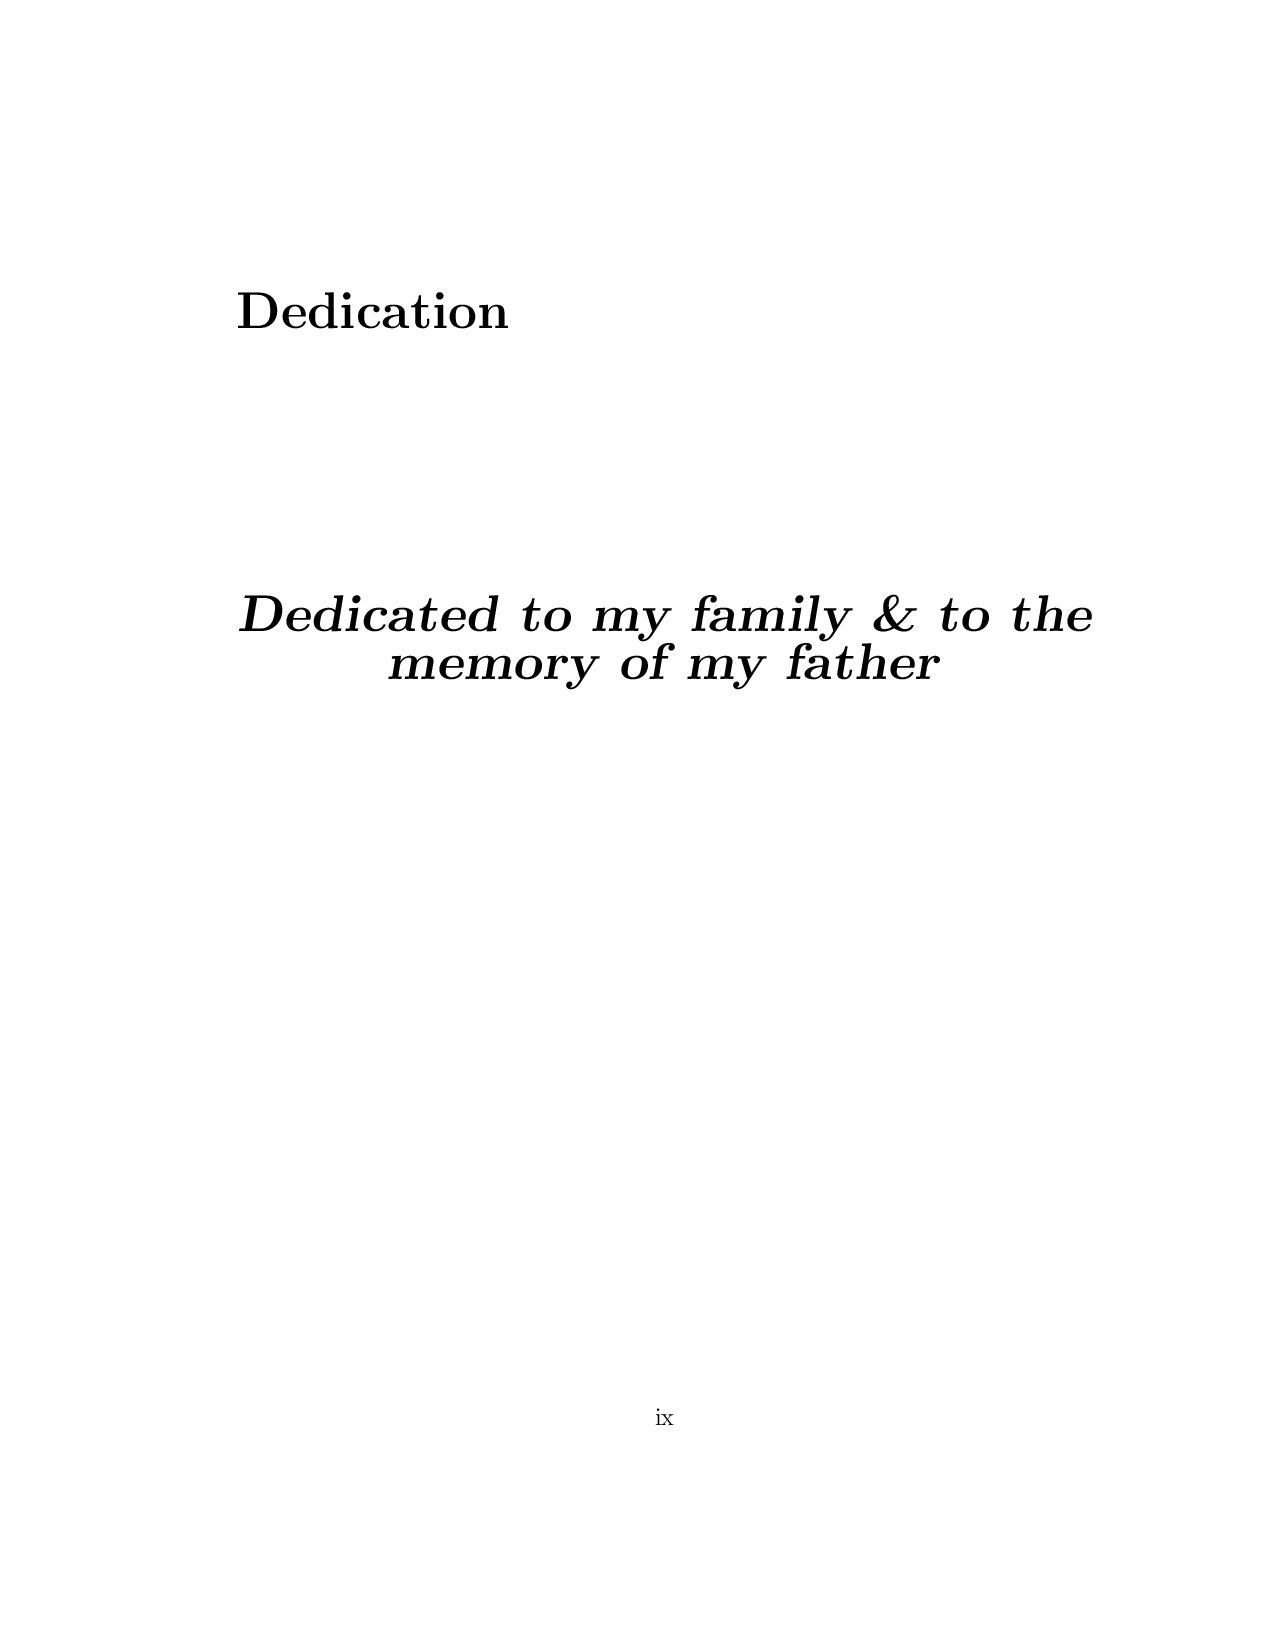 Dissertation dedication to my family